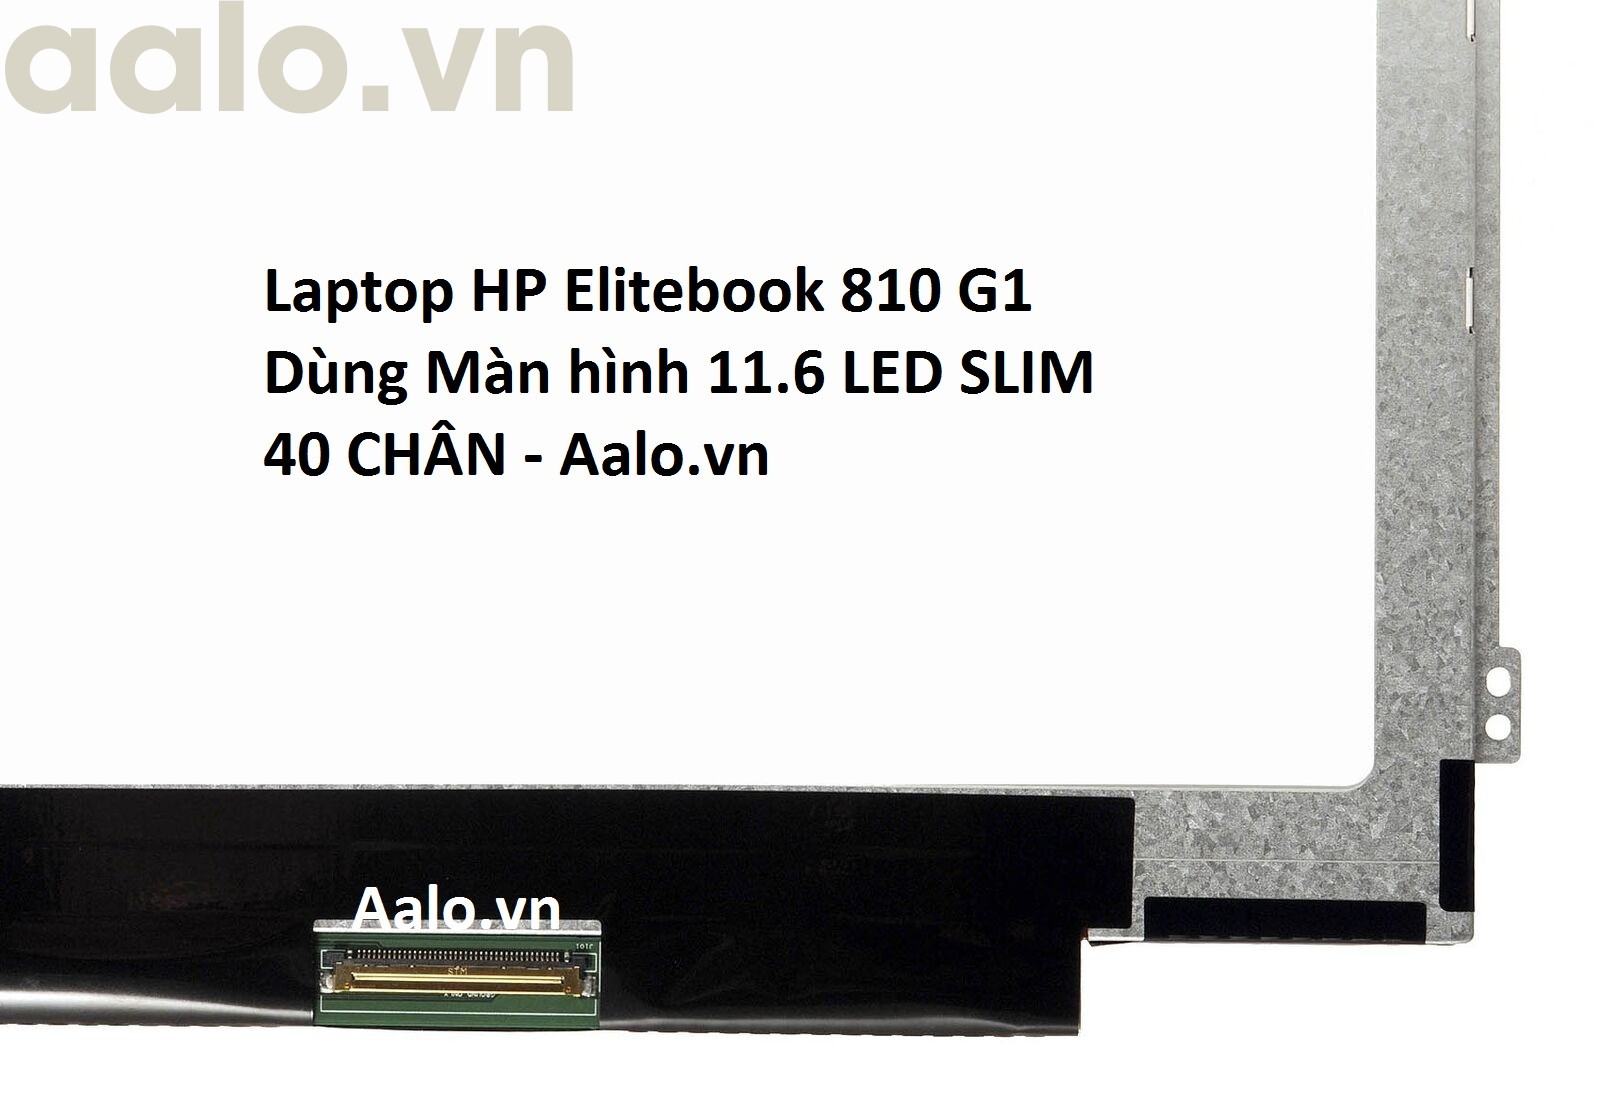 Màn hình Laptop HP Elitebook 810 G1